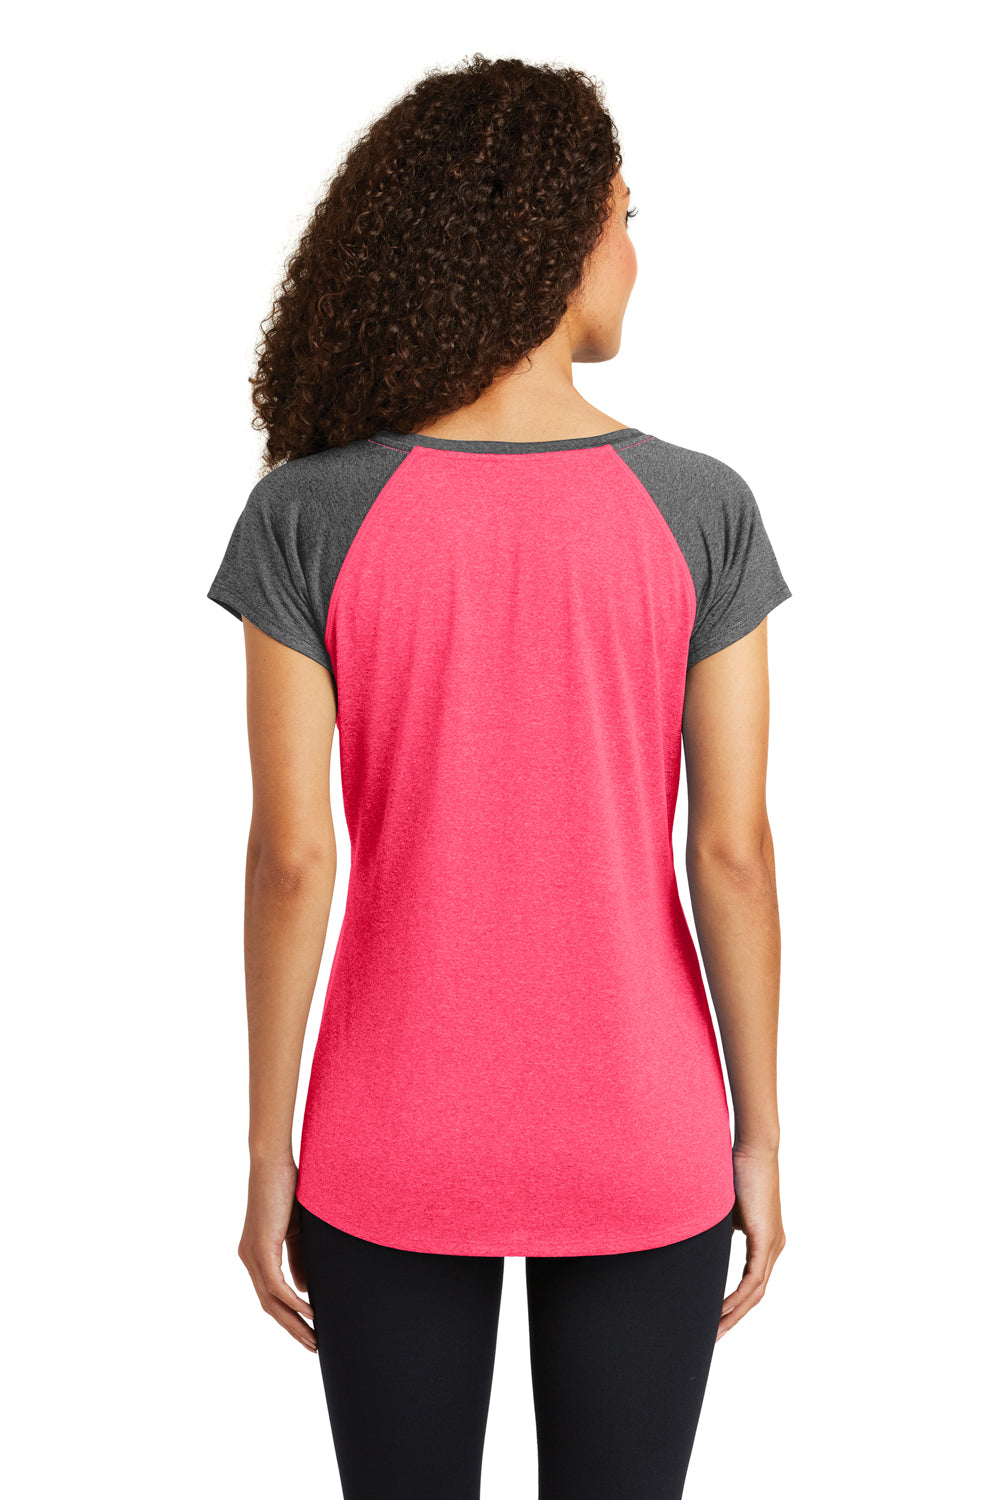 Sport-Tek LST362 Womens Contender Heather Moisture Wicking Short Sleeve Wide Neck T-Shirt Fuchsia Pink/Graphite Grey Back